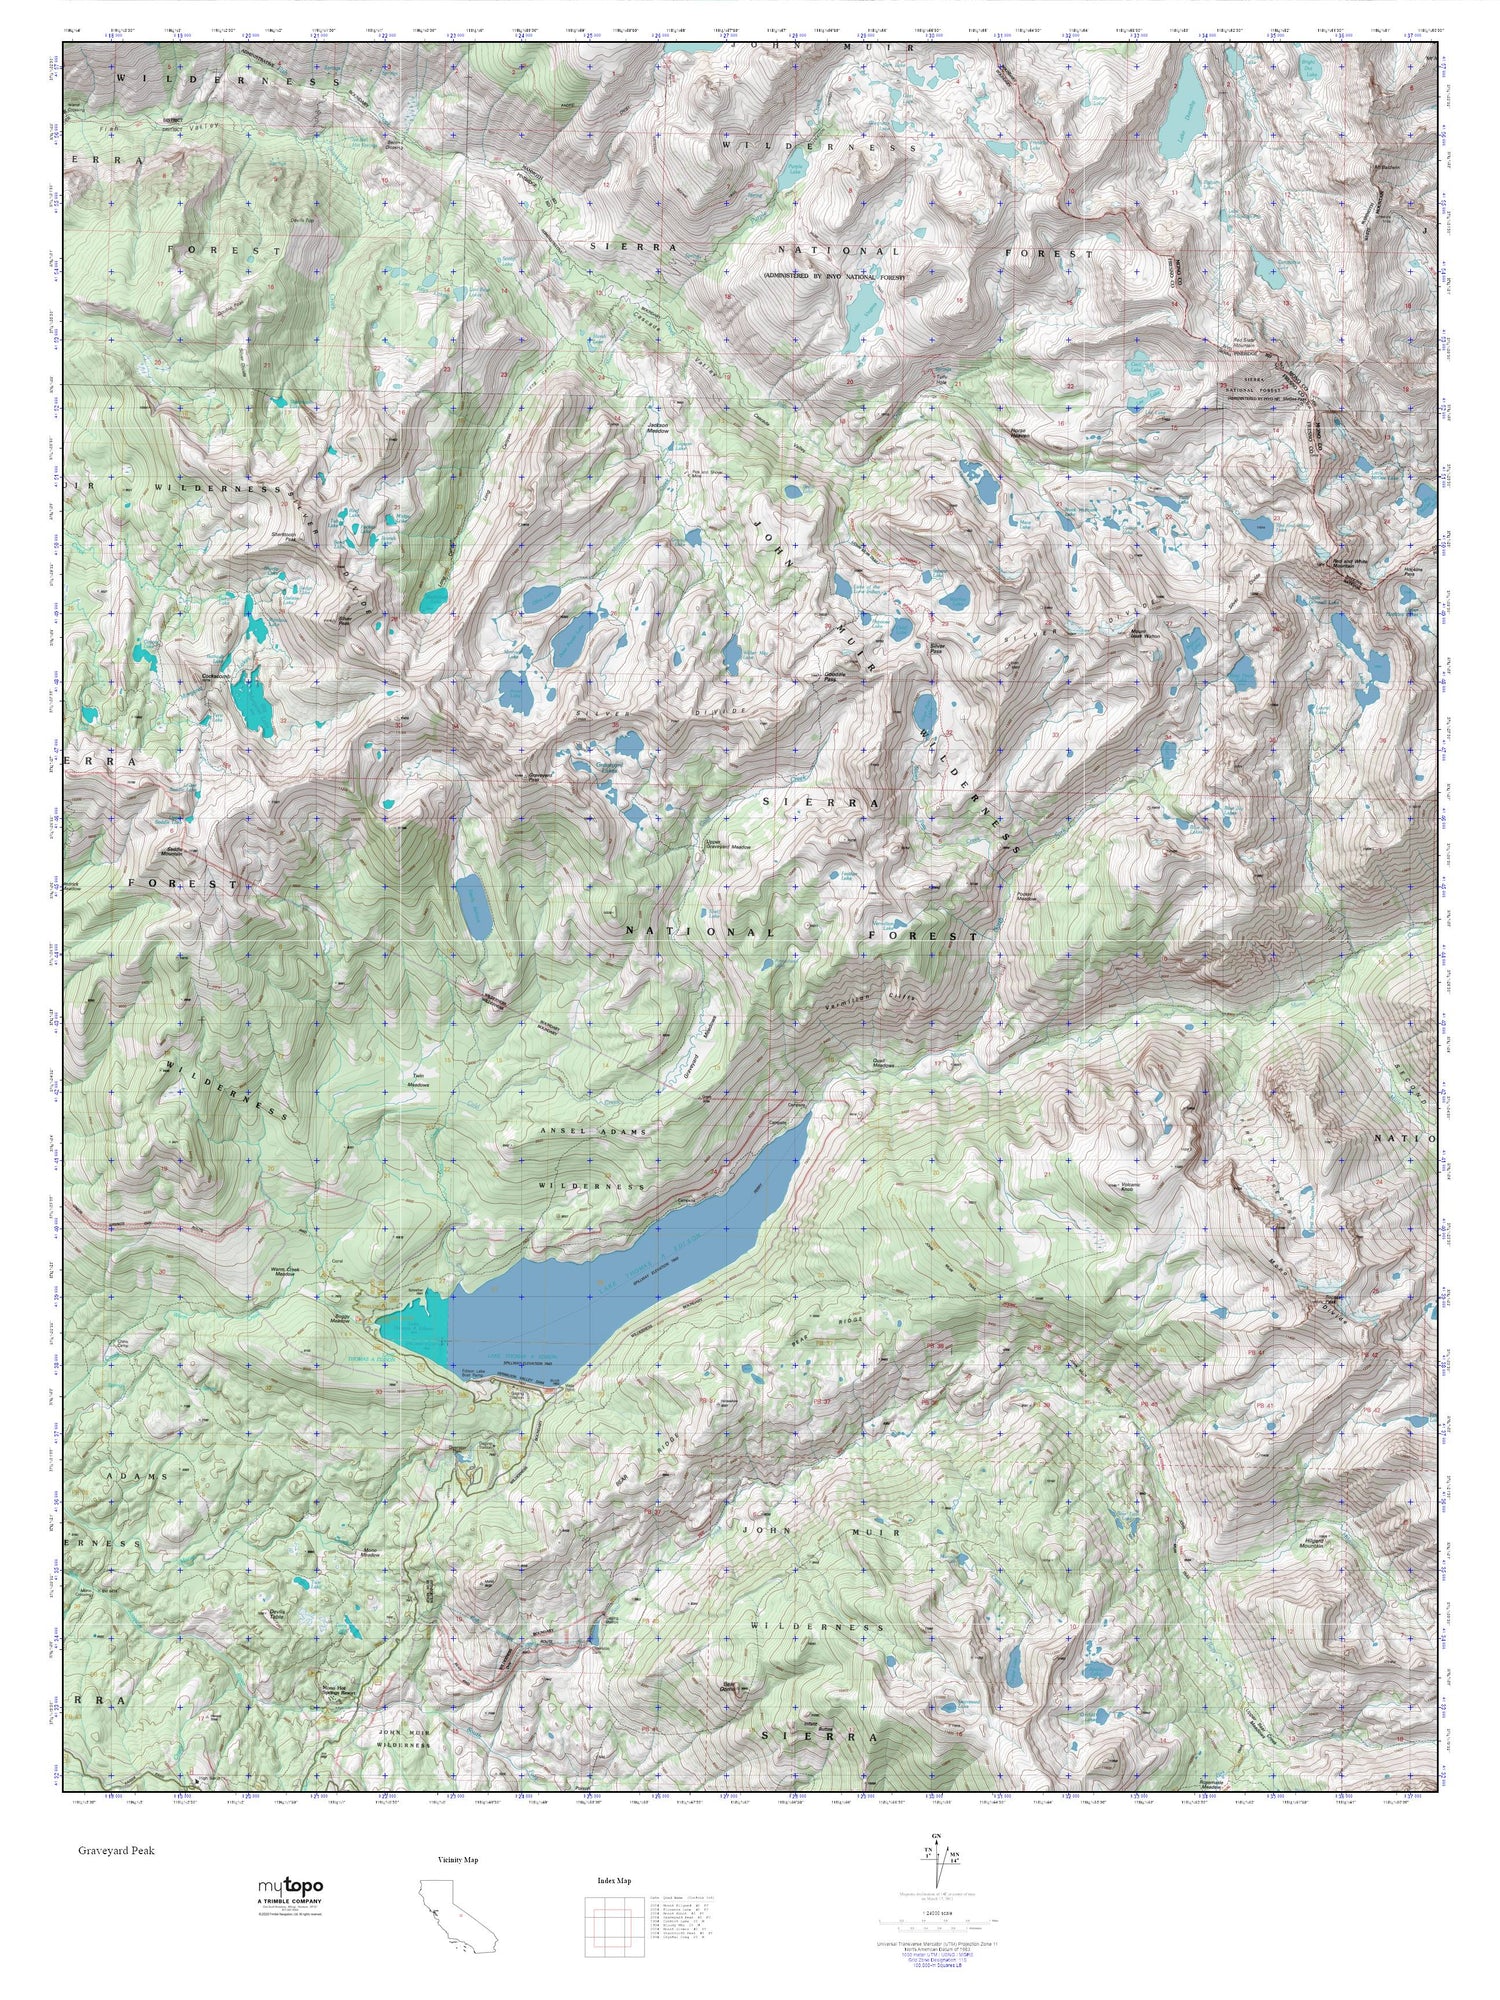 Graveyard Peak MyTopo Explorer Series Map Image